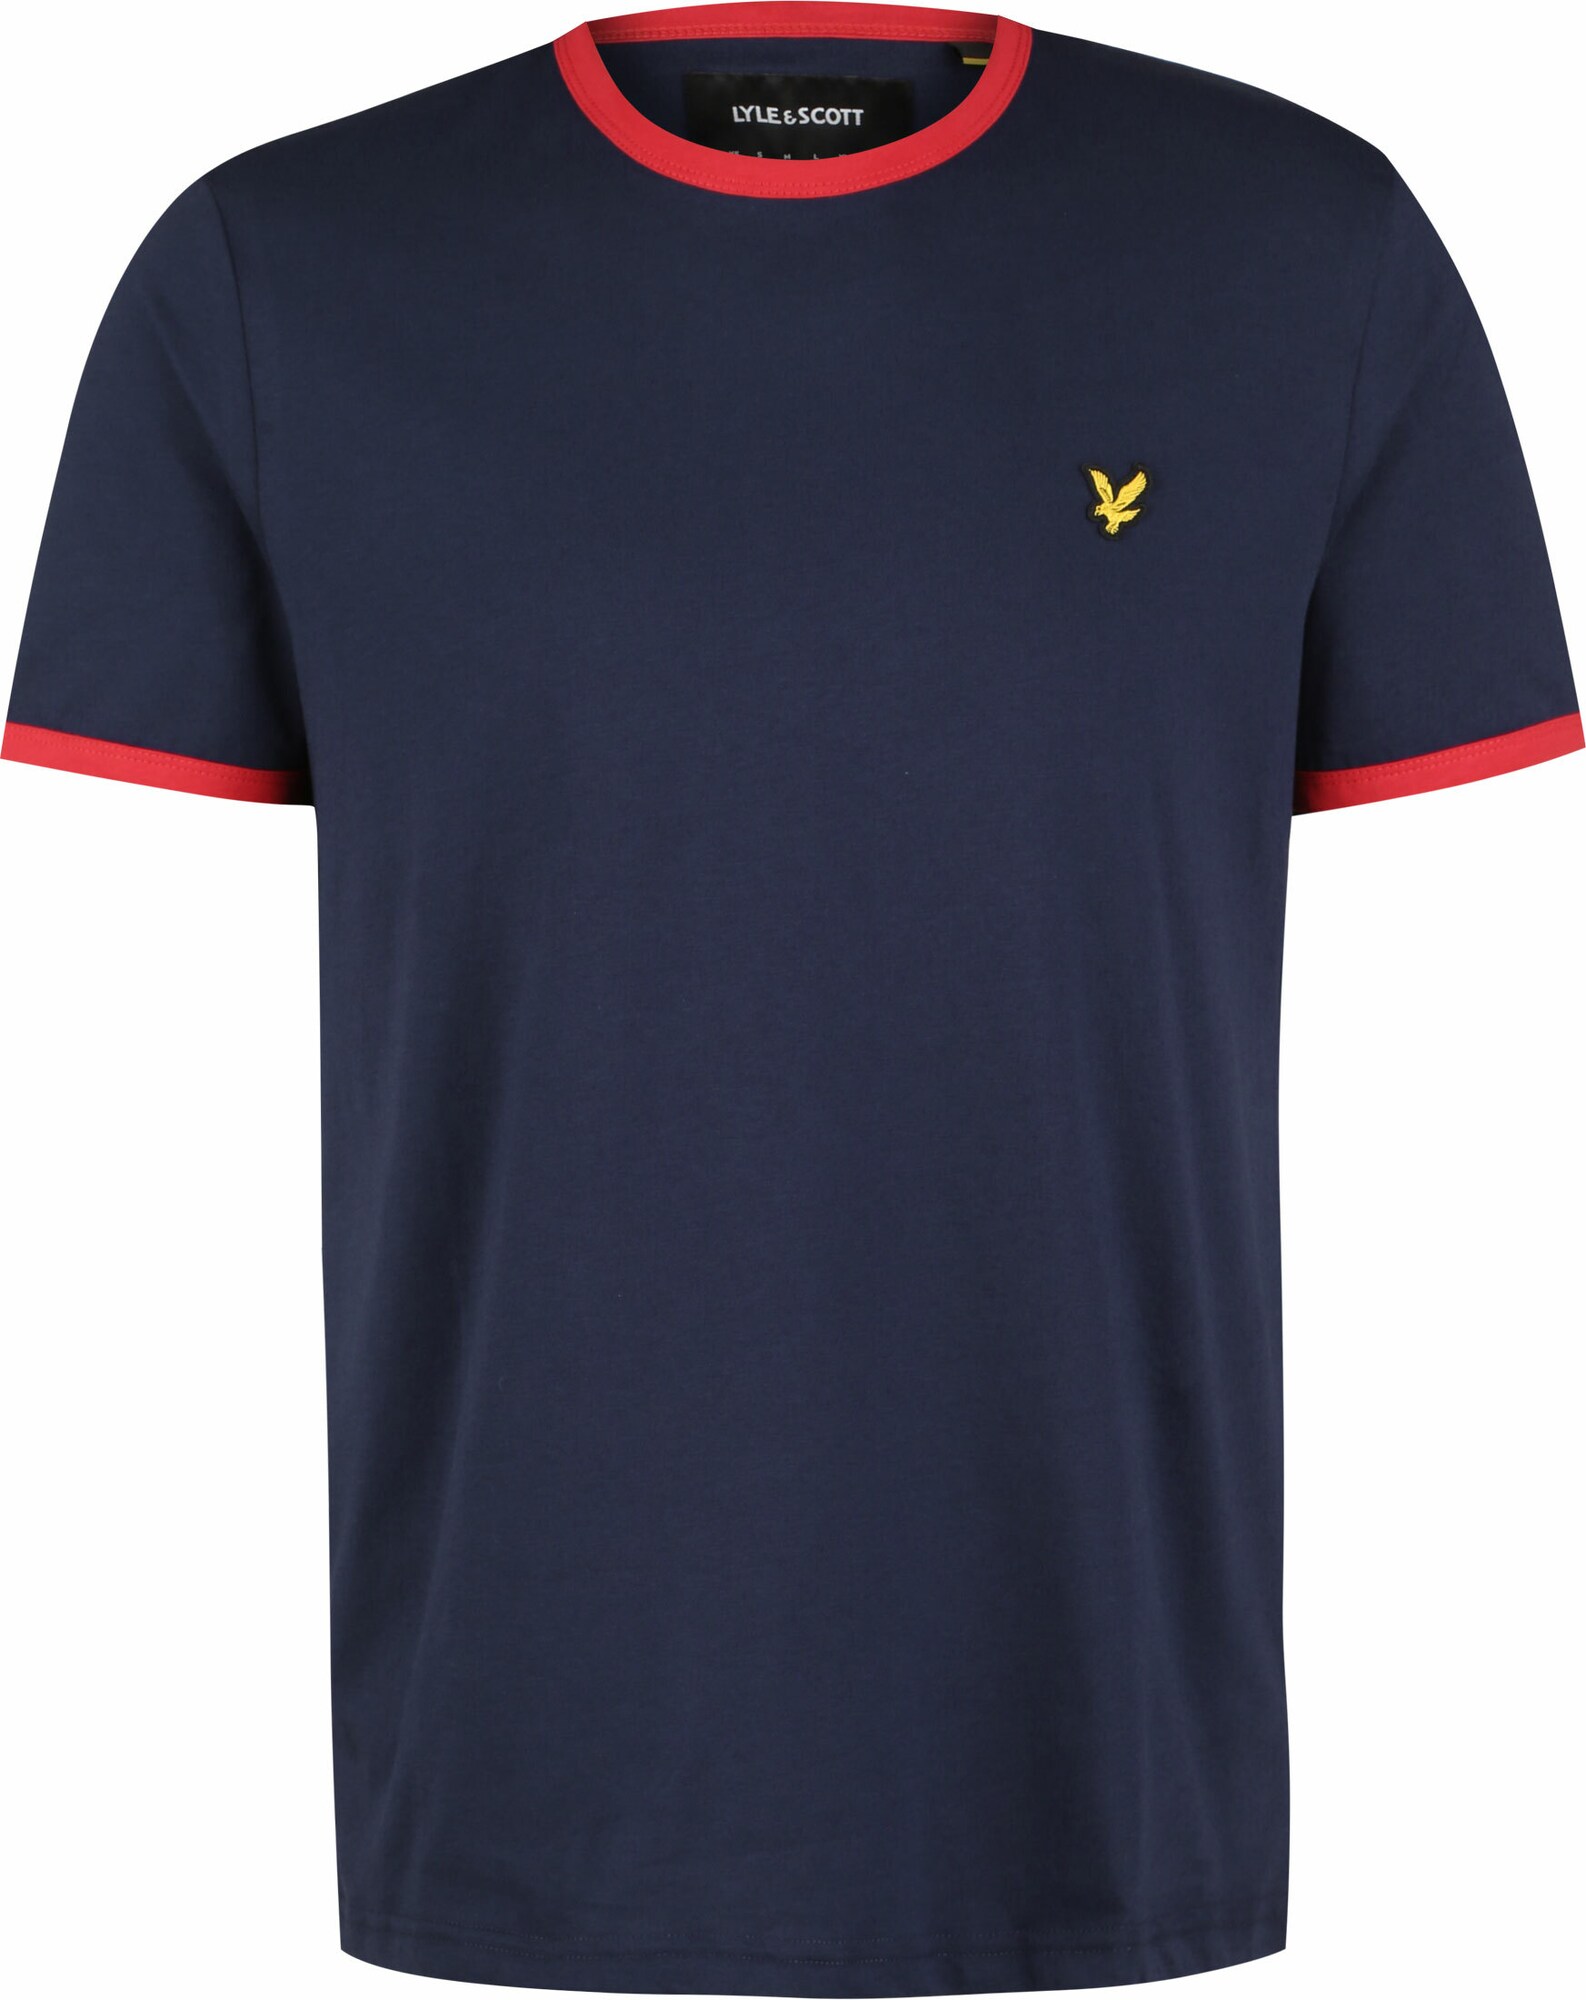 Lyle & Scott Shirt 'Ringer'  navy / red / yellow